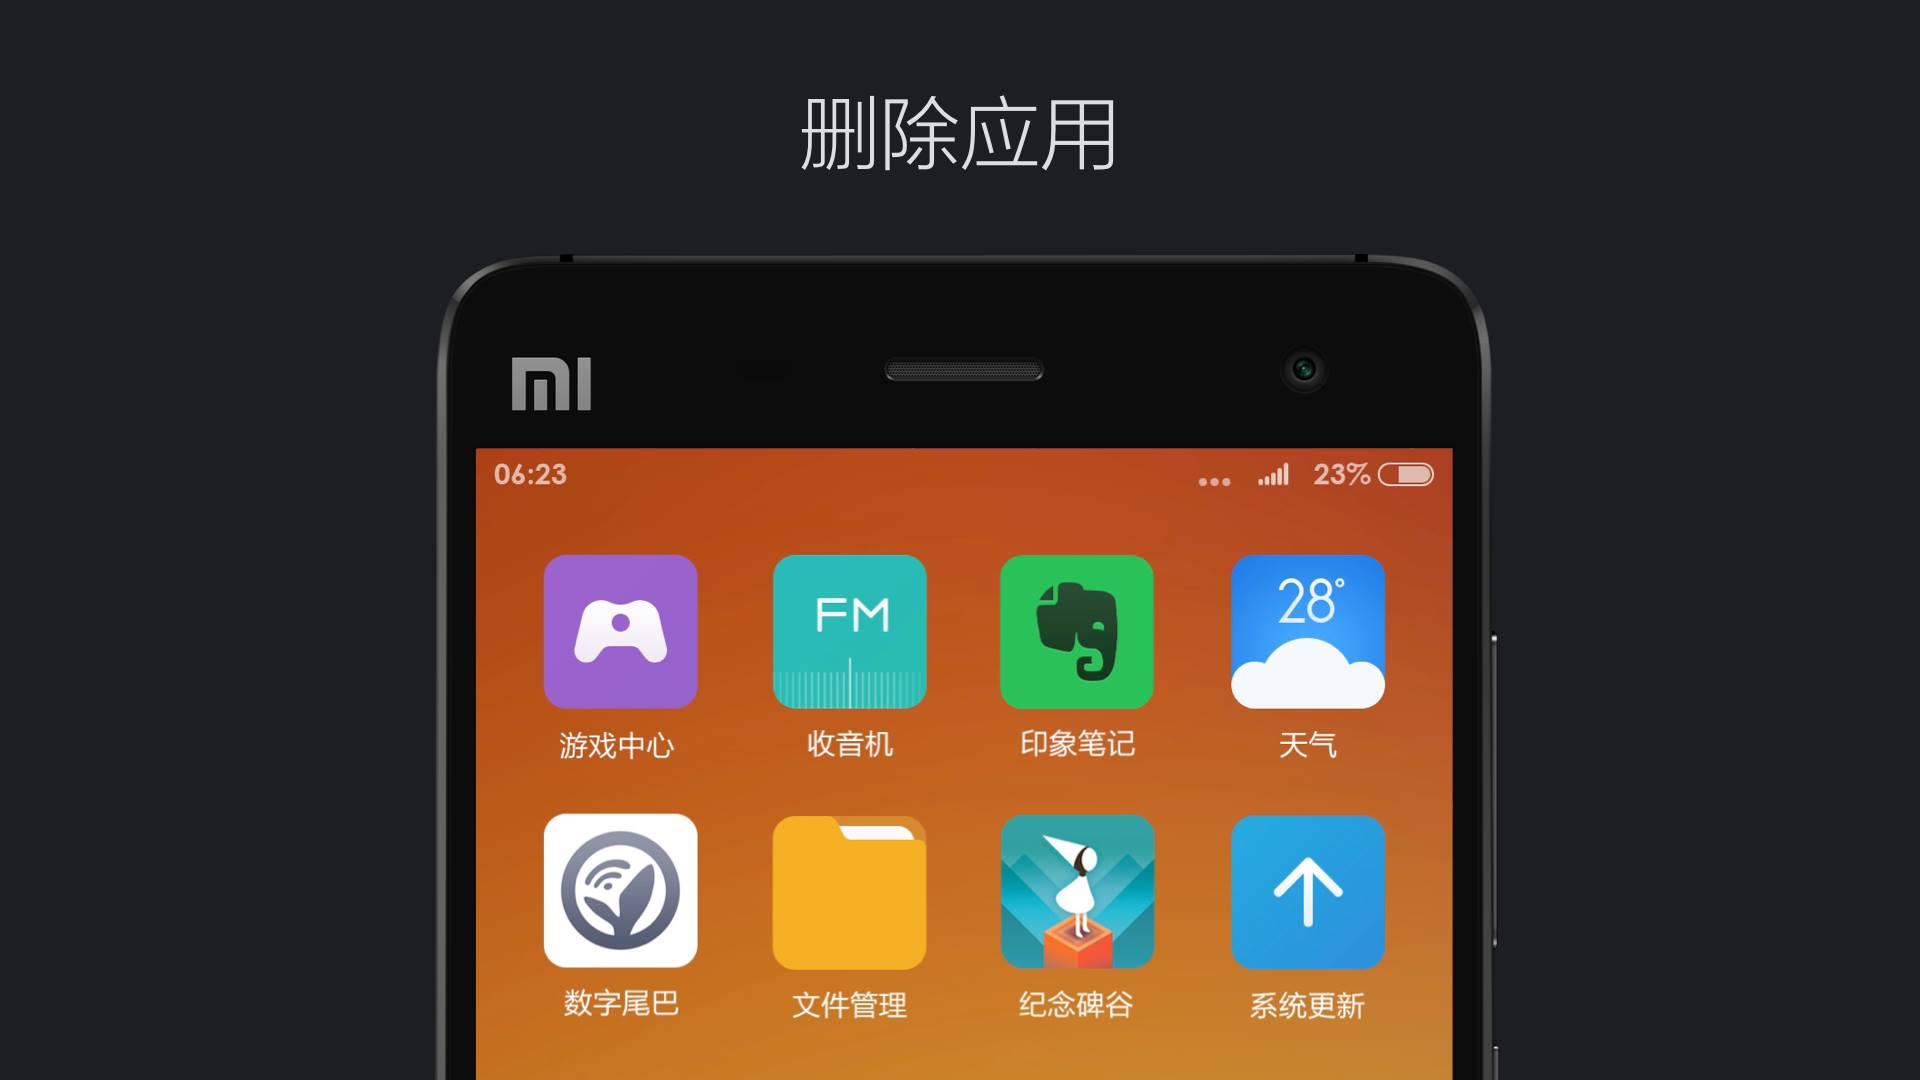 Реклама на телефоне miui. MIUI v5 экран блокировки.